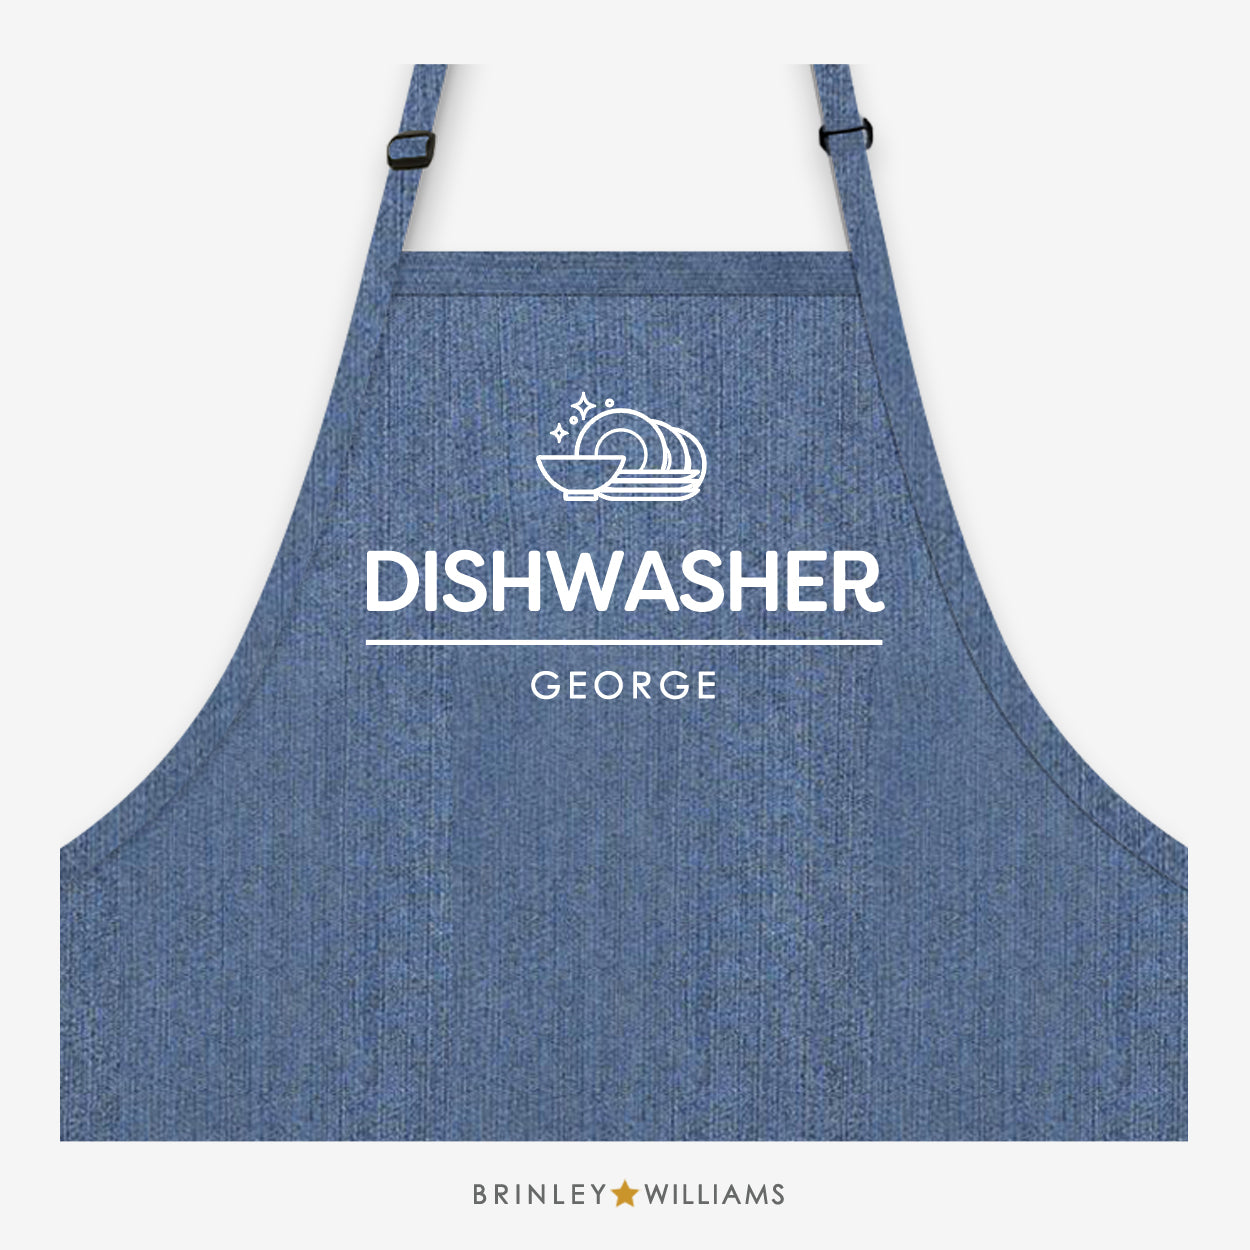 Dishwasher Denim Apron - Personalised - Blue Denim